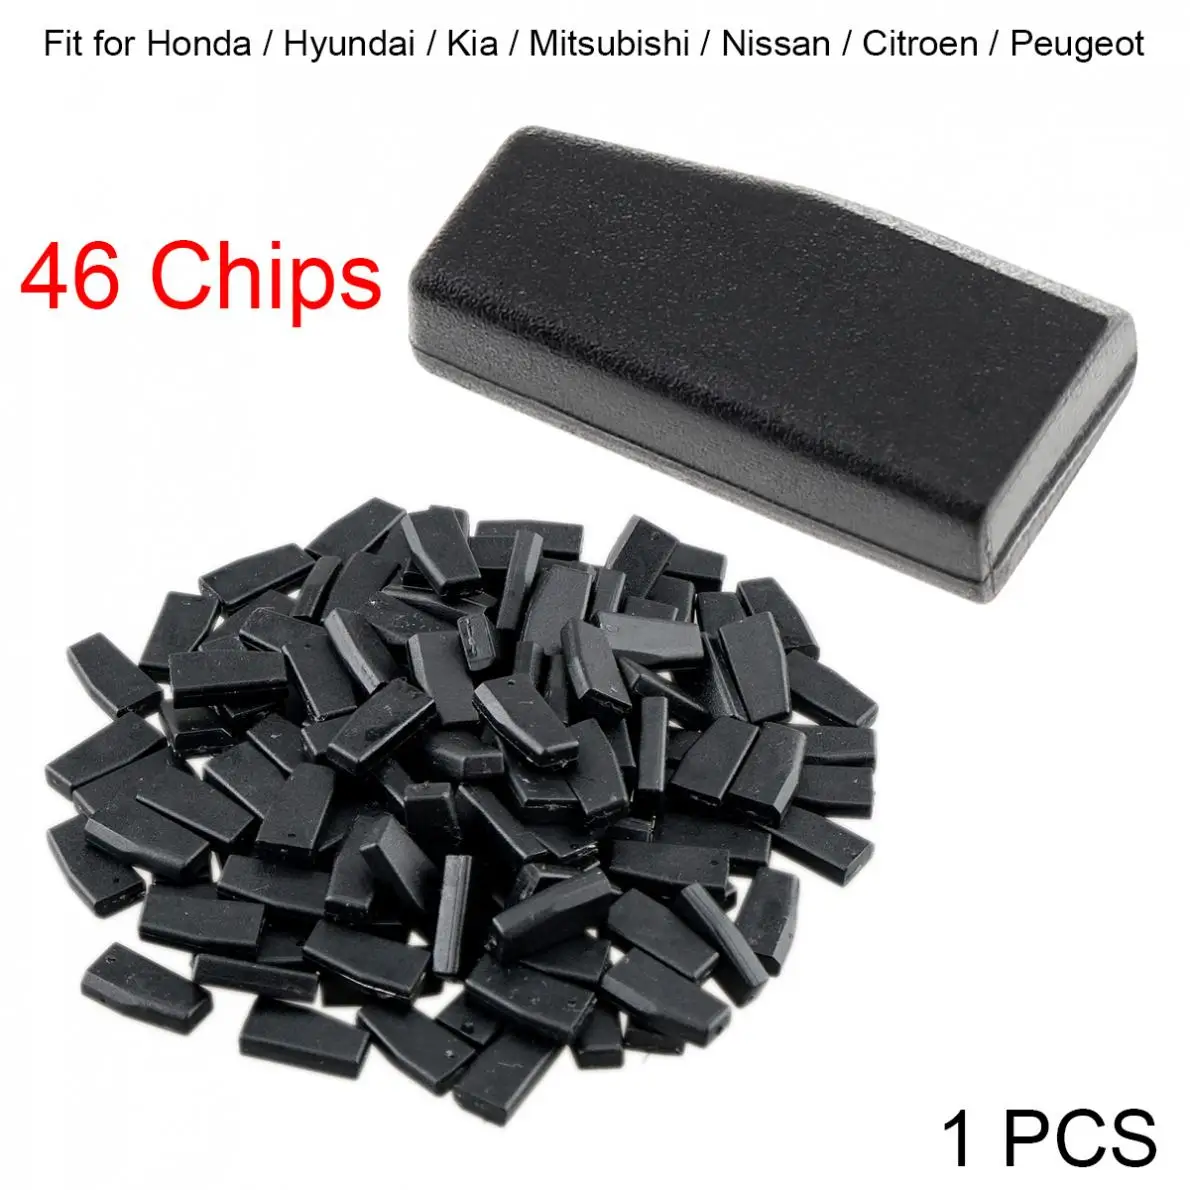 1 Pcs Blank ID46 PCF7936 CarCarbon Chip Auto Key Transponder Chips Fit for Honda Hyundai Kia Nissan Citroen Peugeot